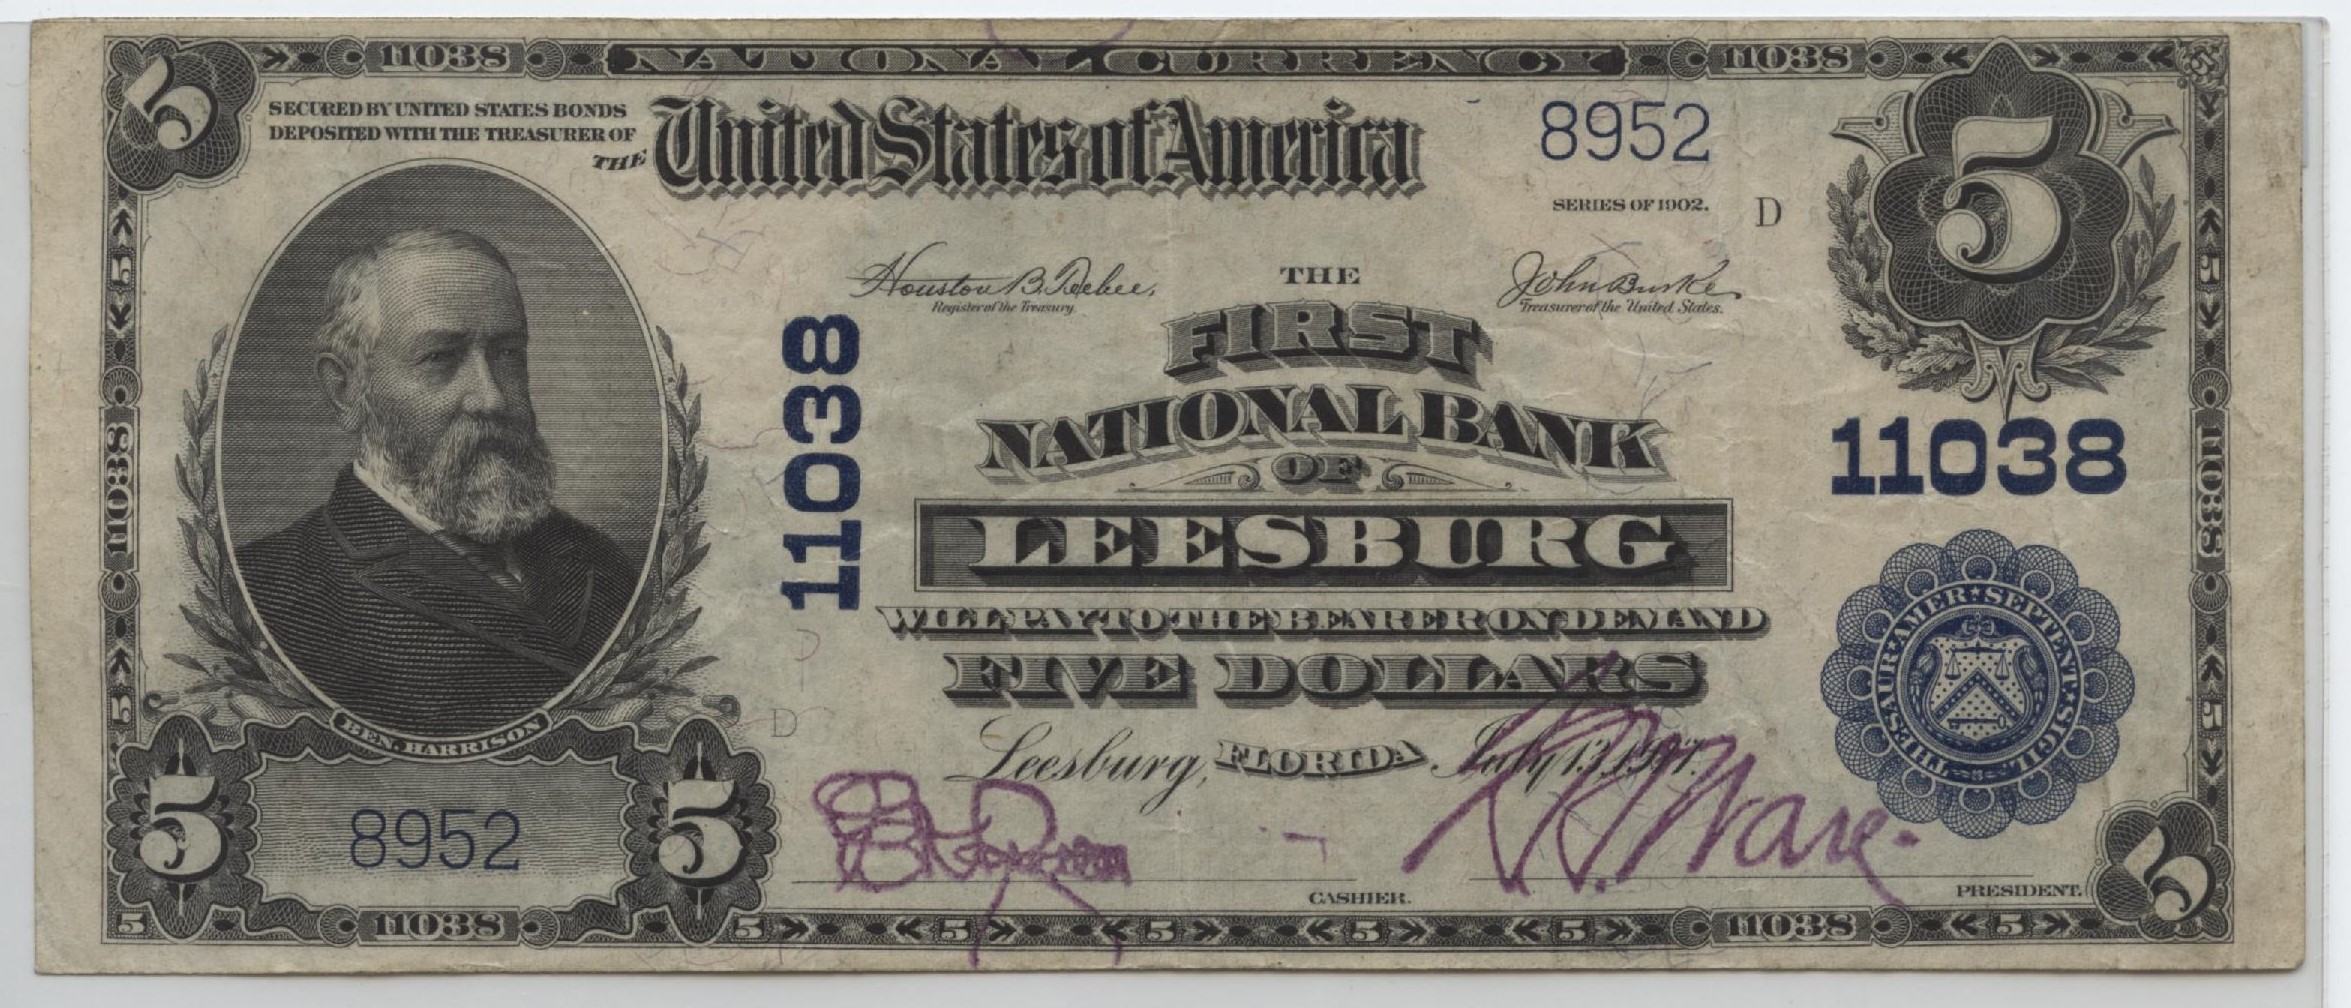 Доллар 95 году. Банкноты долларов США 19 века. Старые американские доллары. США доллары 19 века. Старые банкноты США.